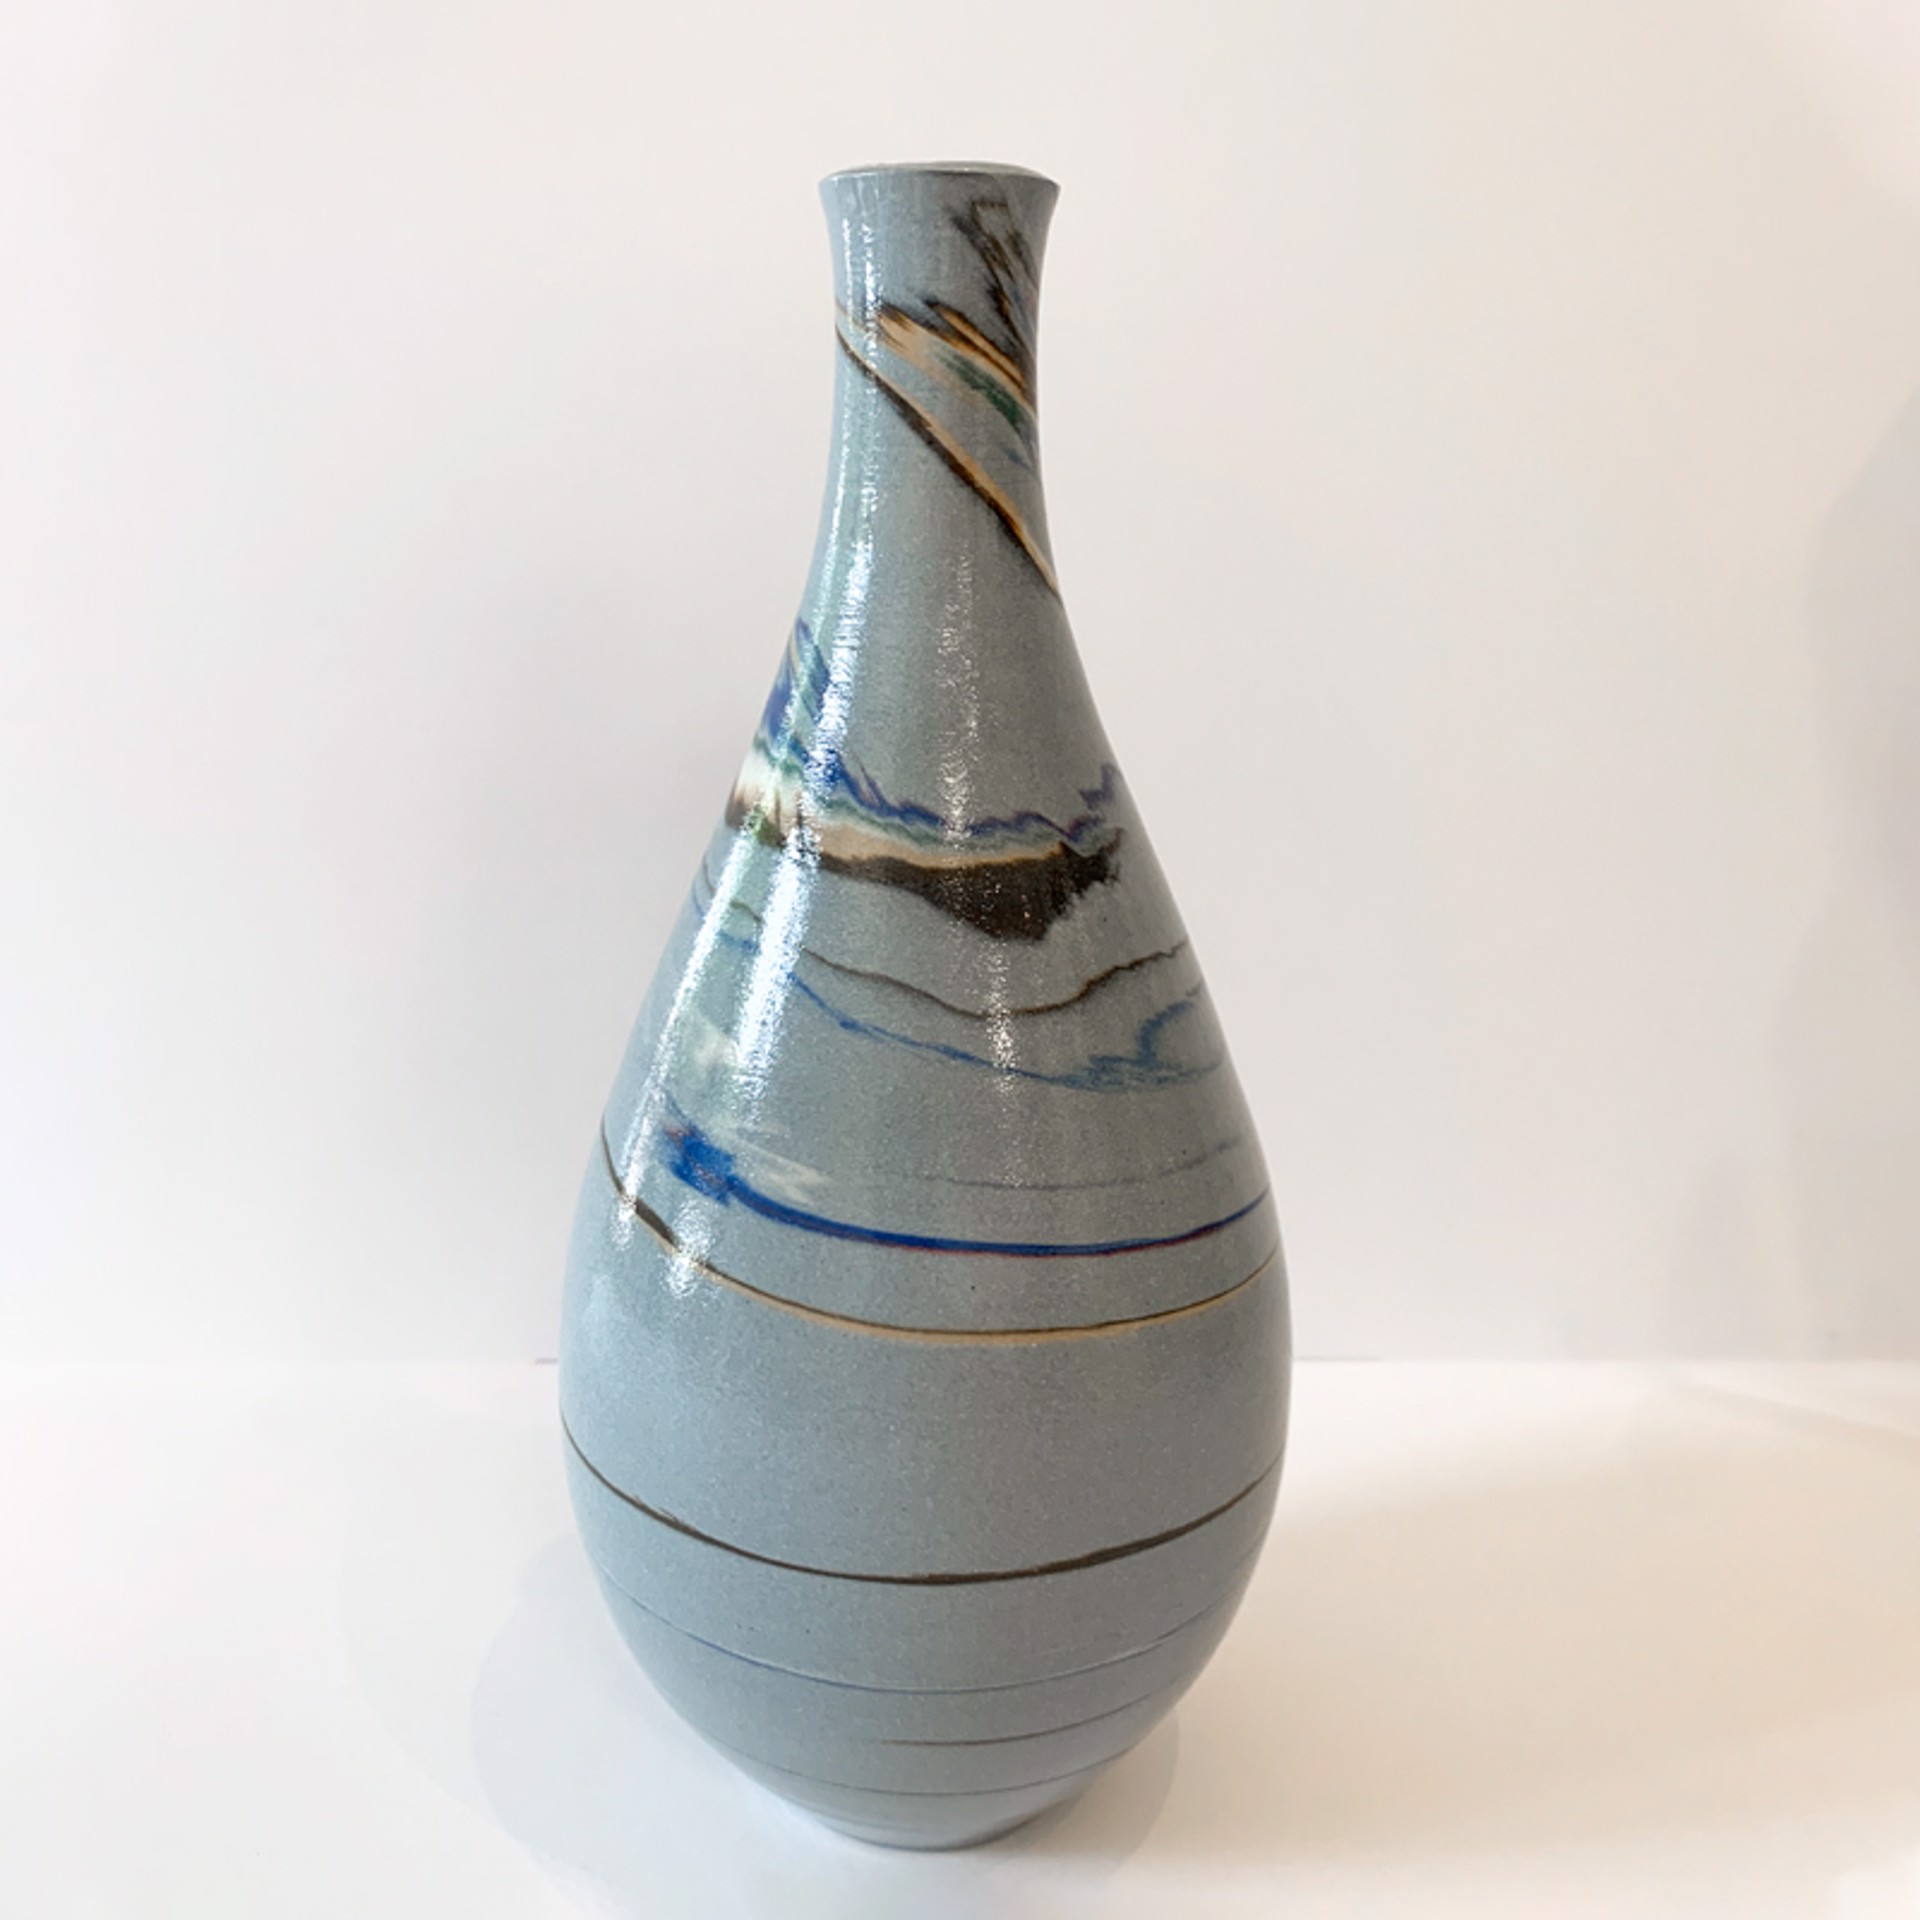 small vase 2 by Jim Keffer